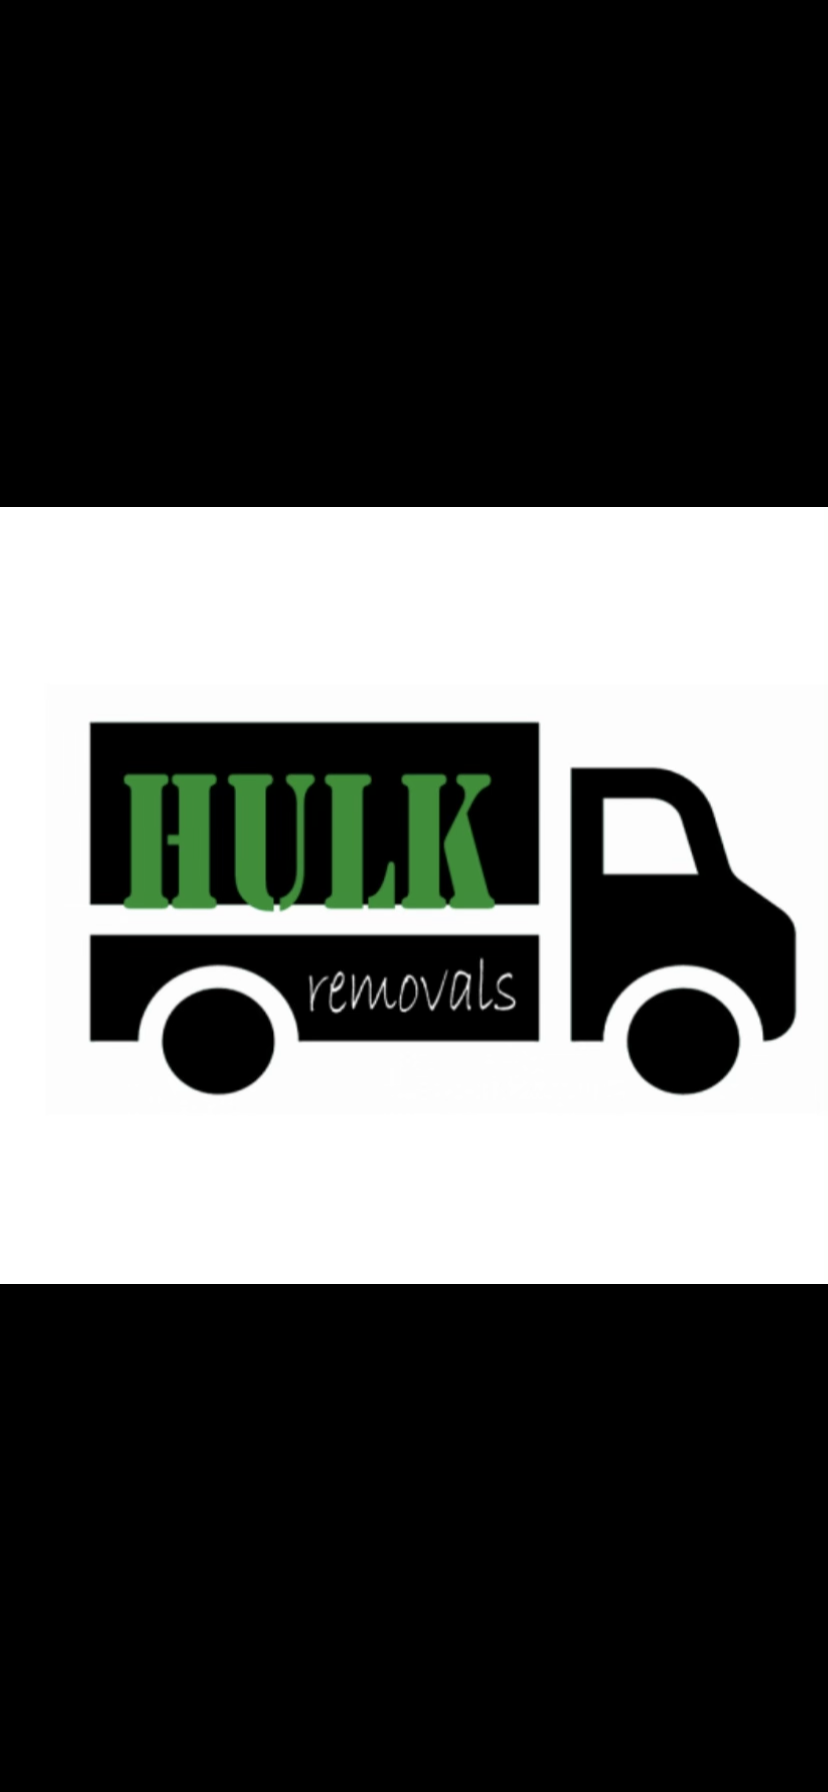 Hulk Removals ltd logo